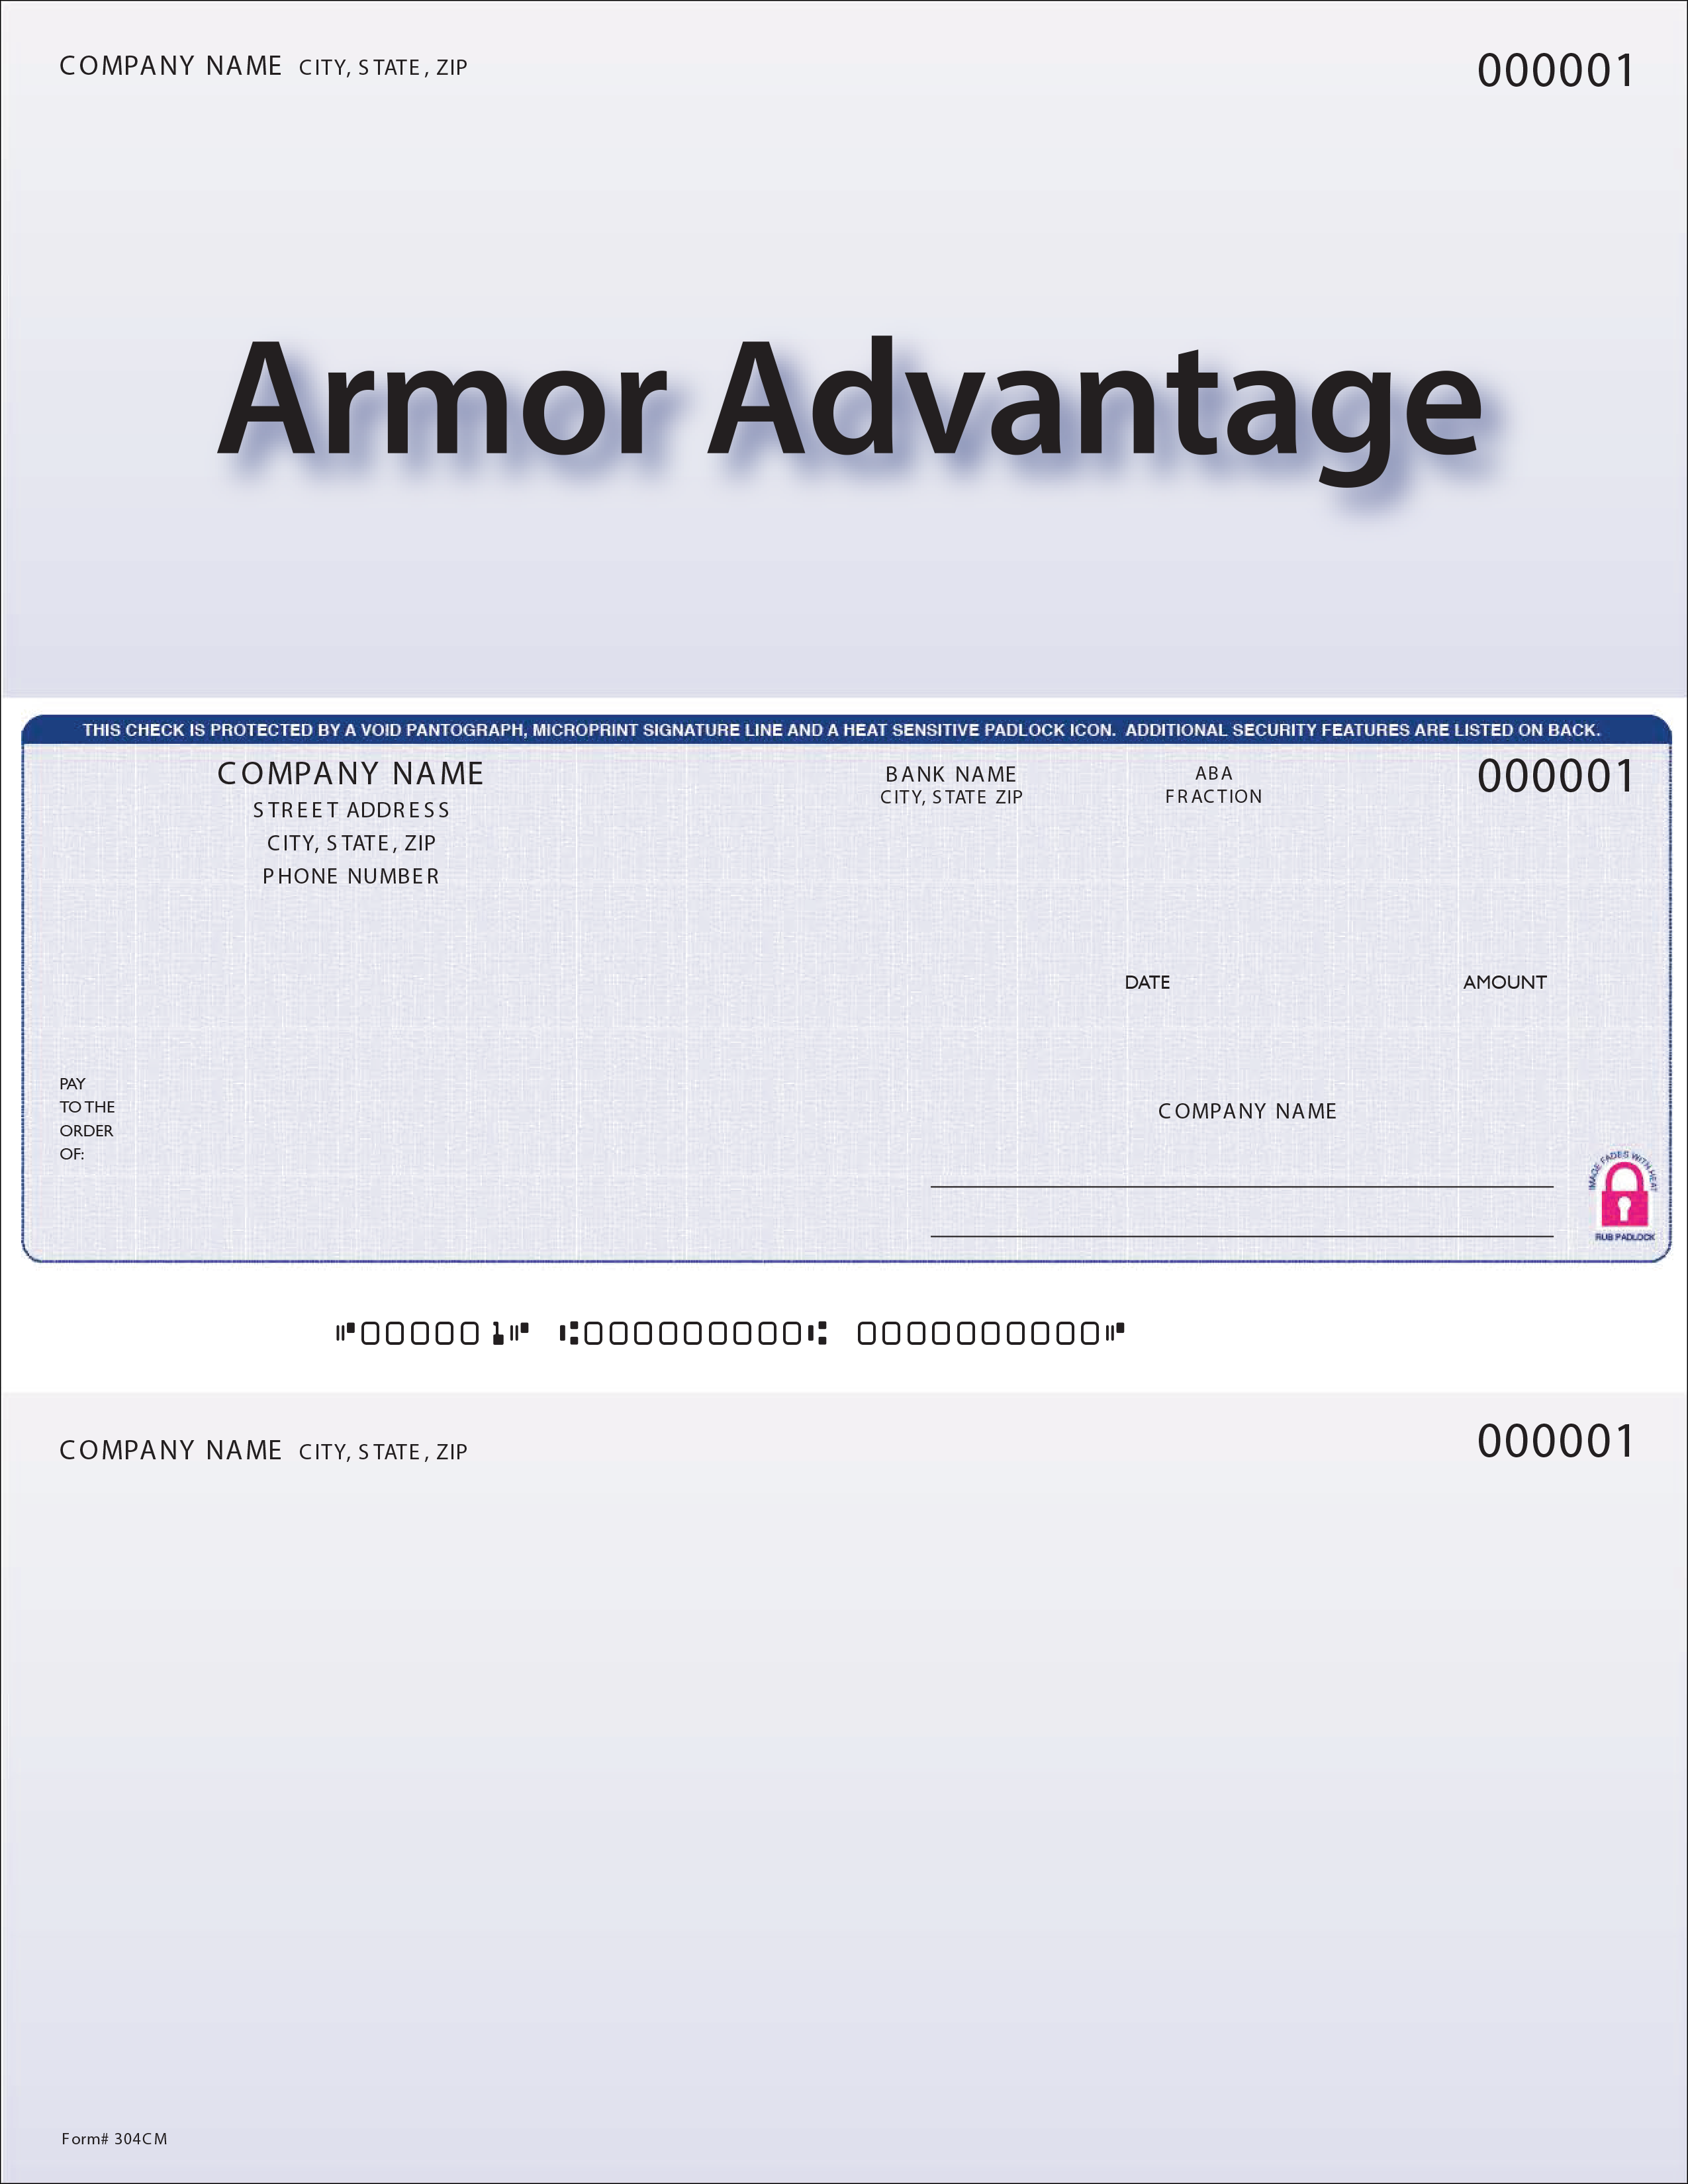 Armor Advantage